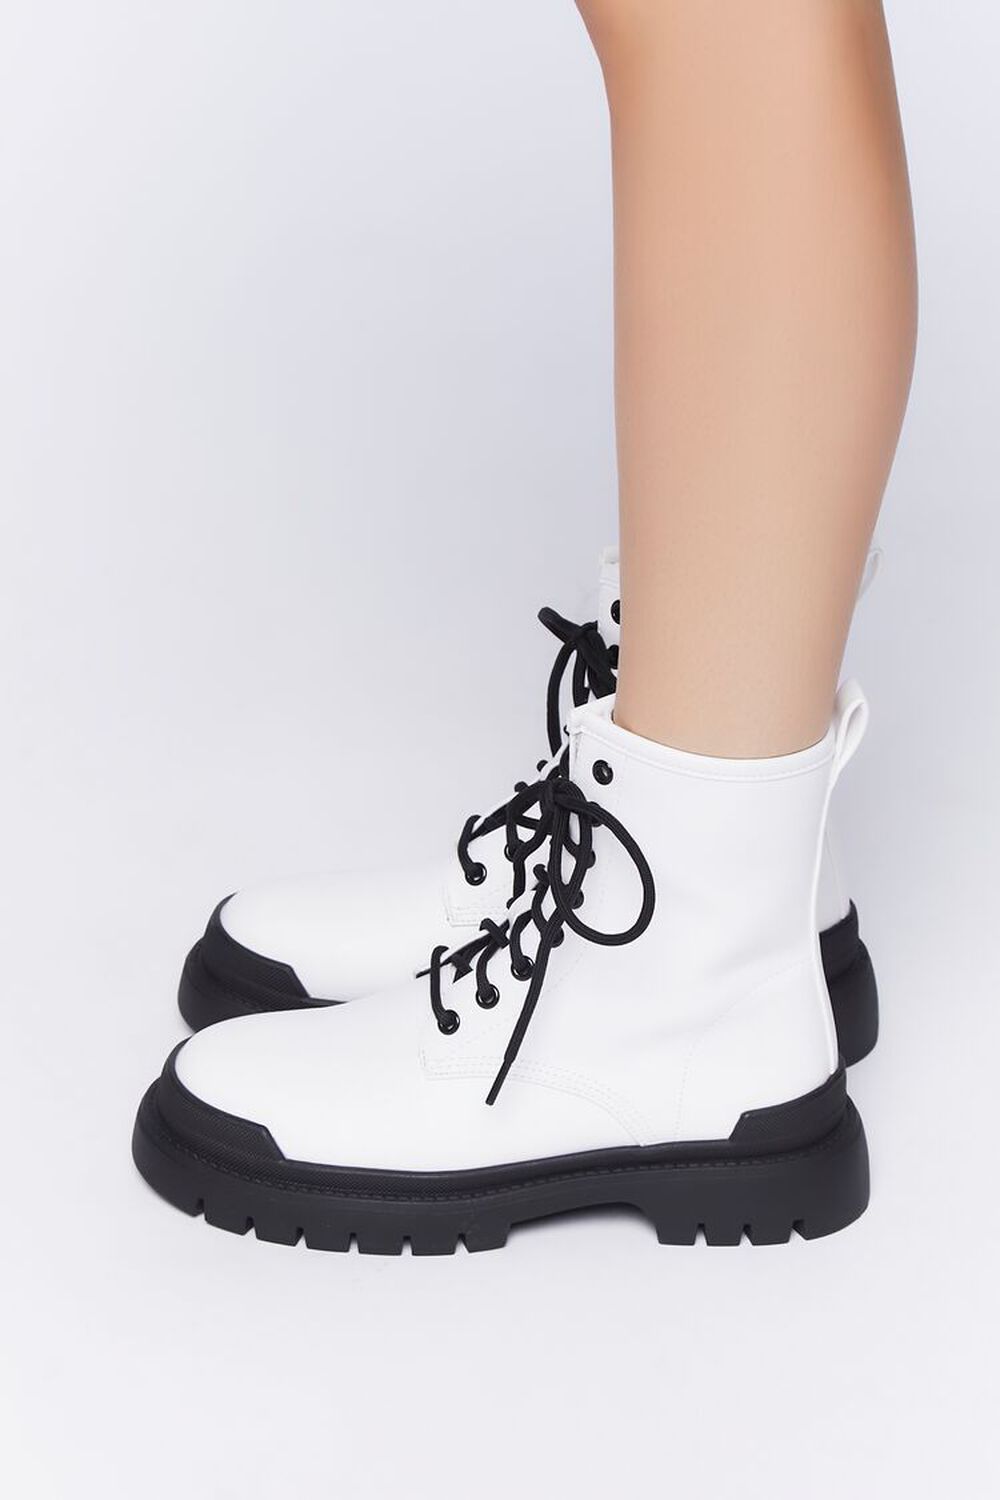 WHITE/BLACK Faux Leather Colorblock Combat Boots, image 2